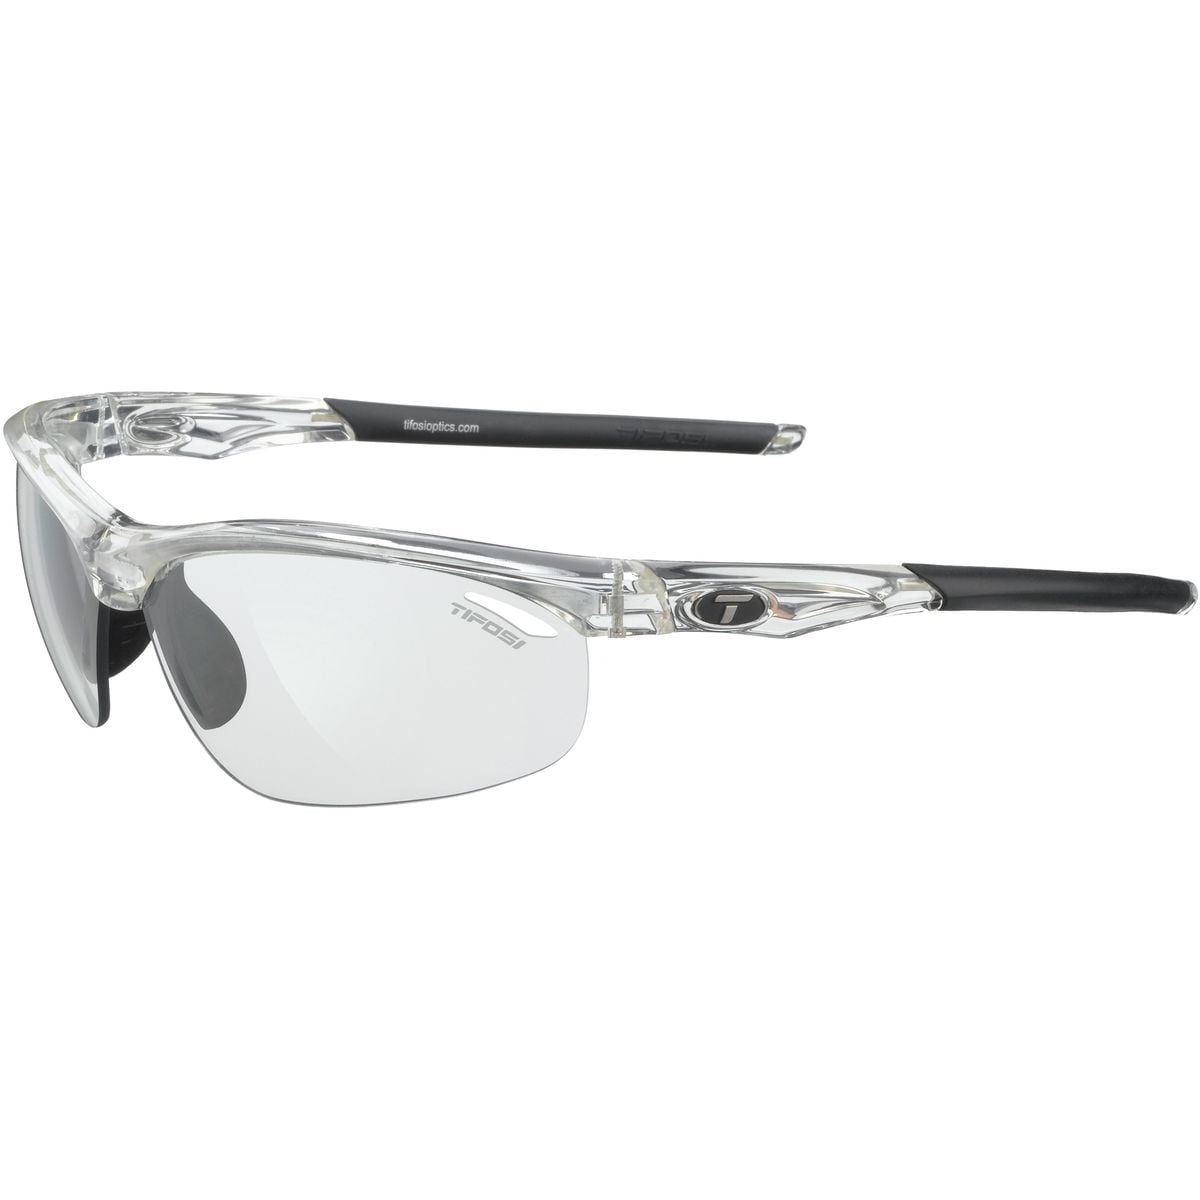 Tifosi Optics Veloce Photochromic Sunglasses - Men's